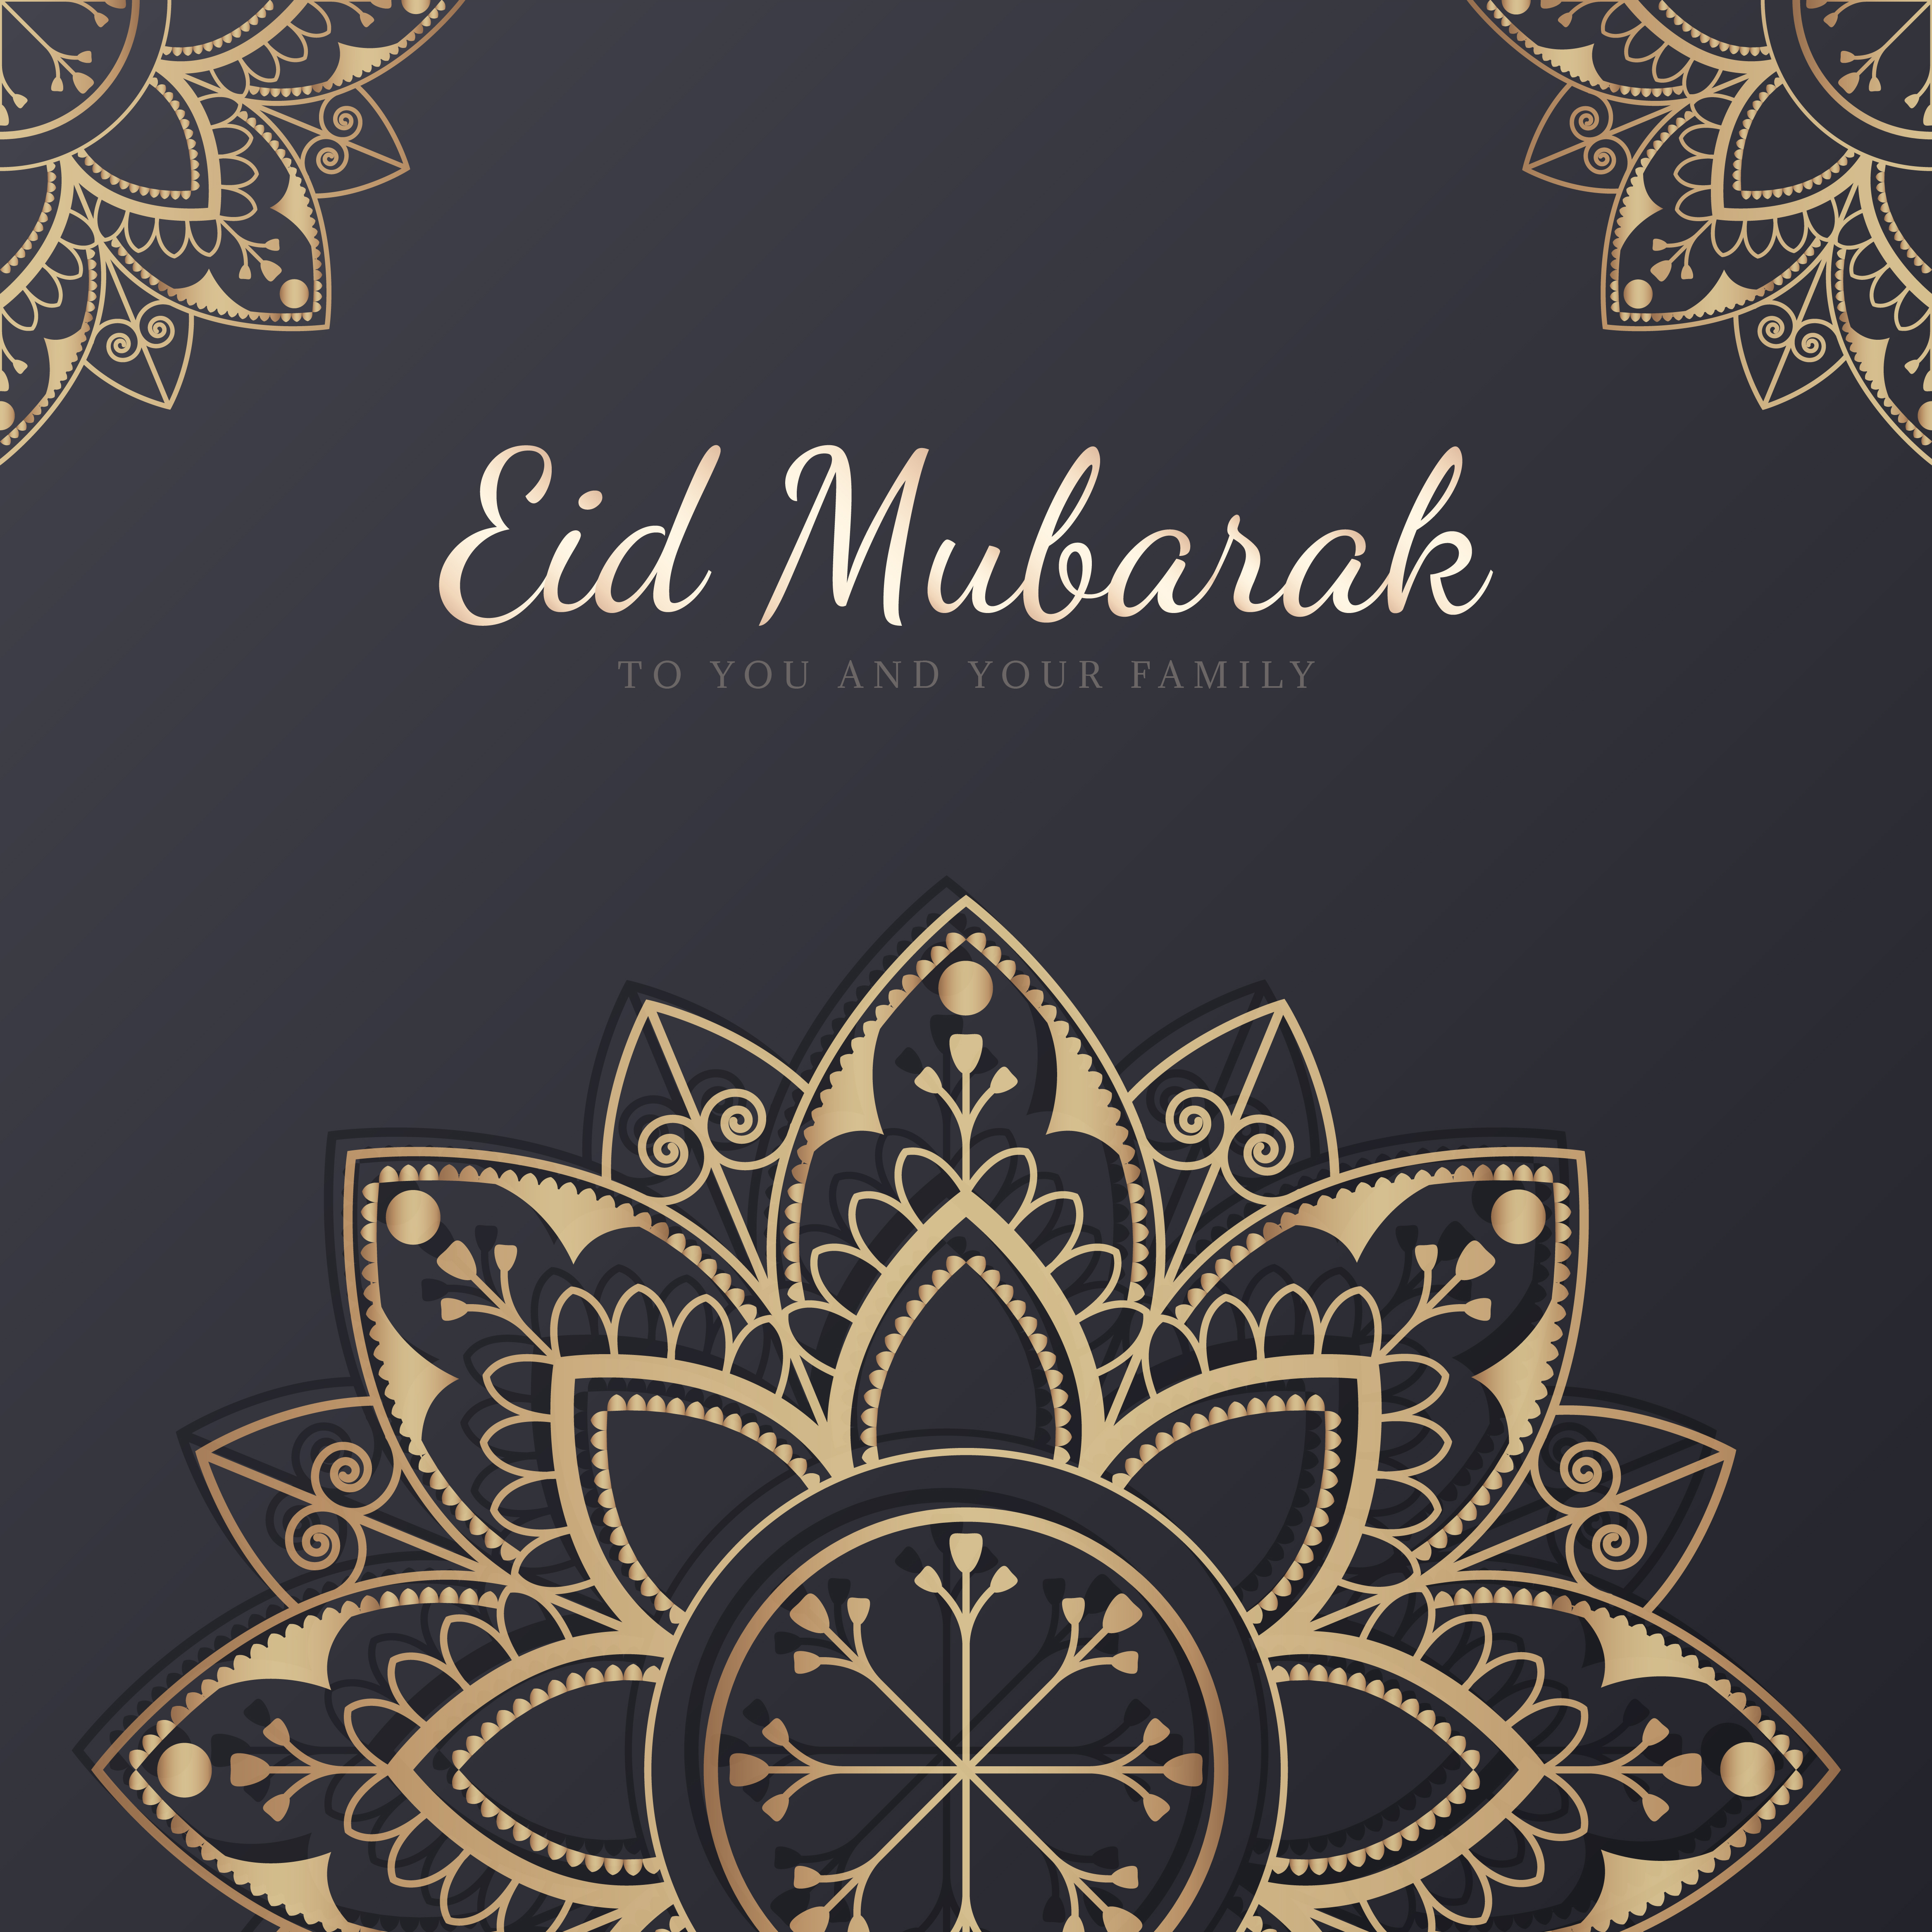 Eid Mubarak celebratory illustration Download Free Vectors, Clipart